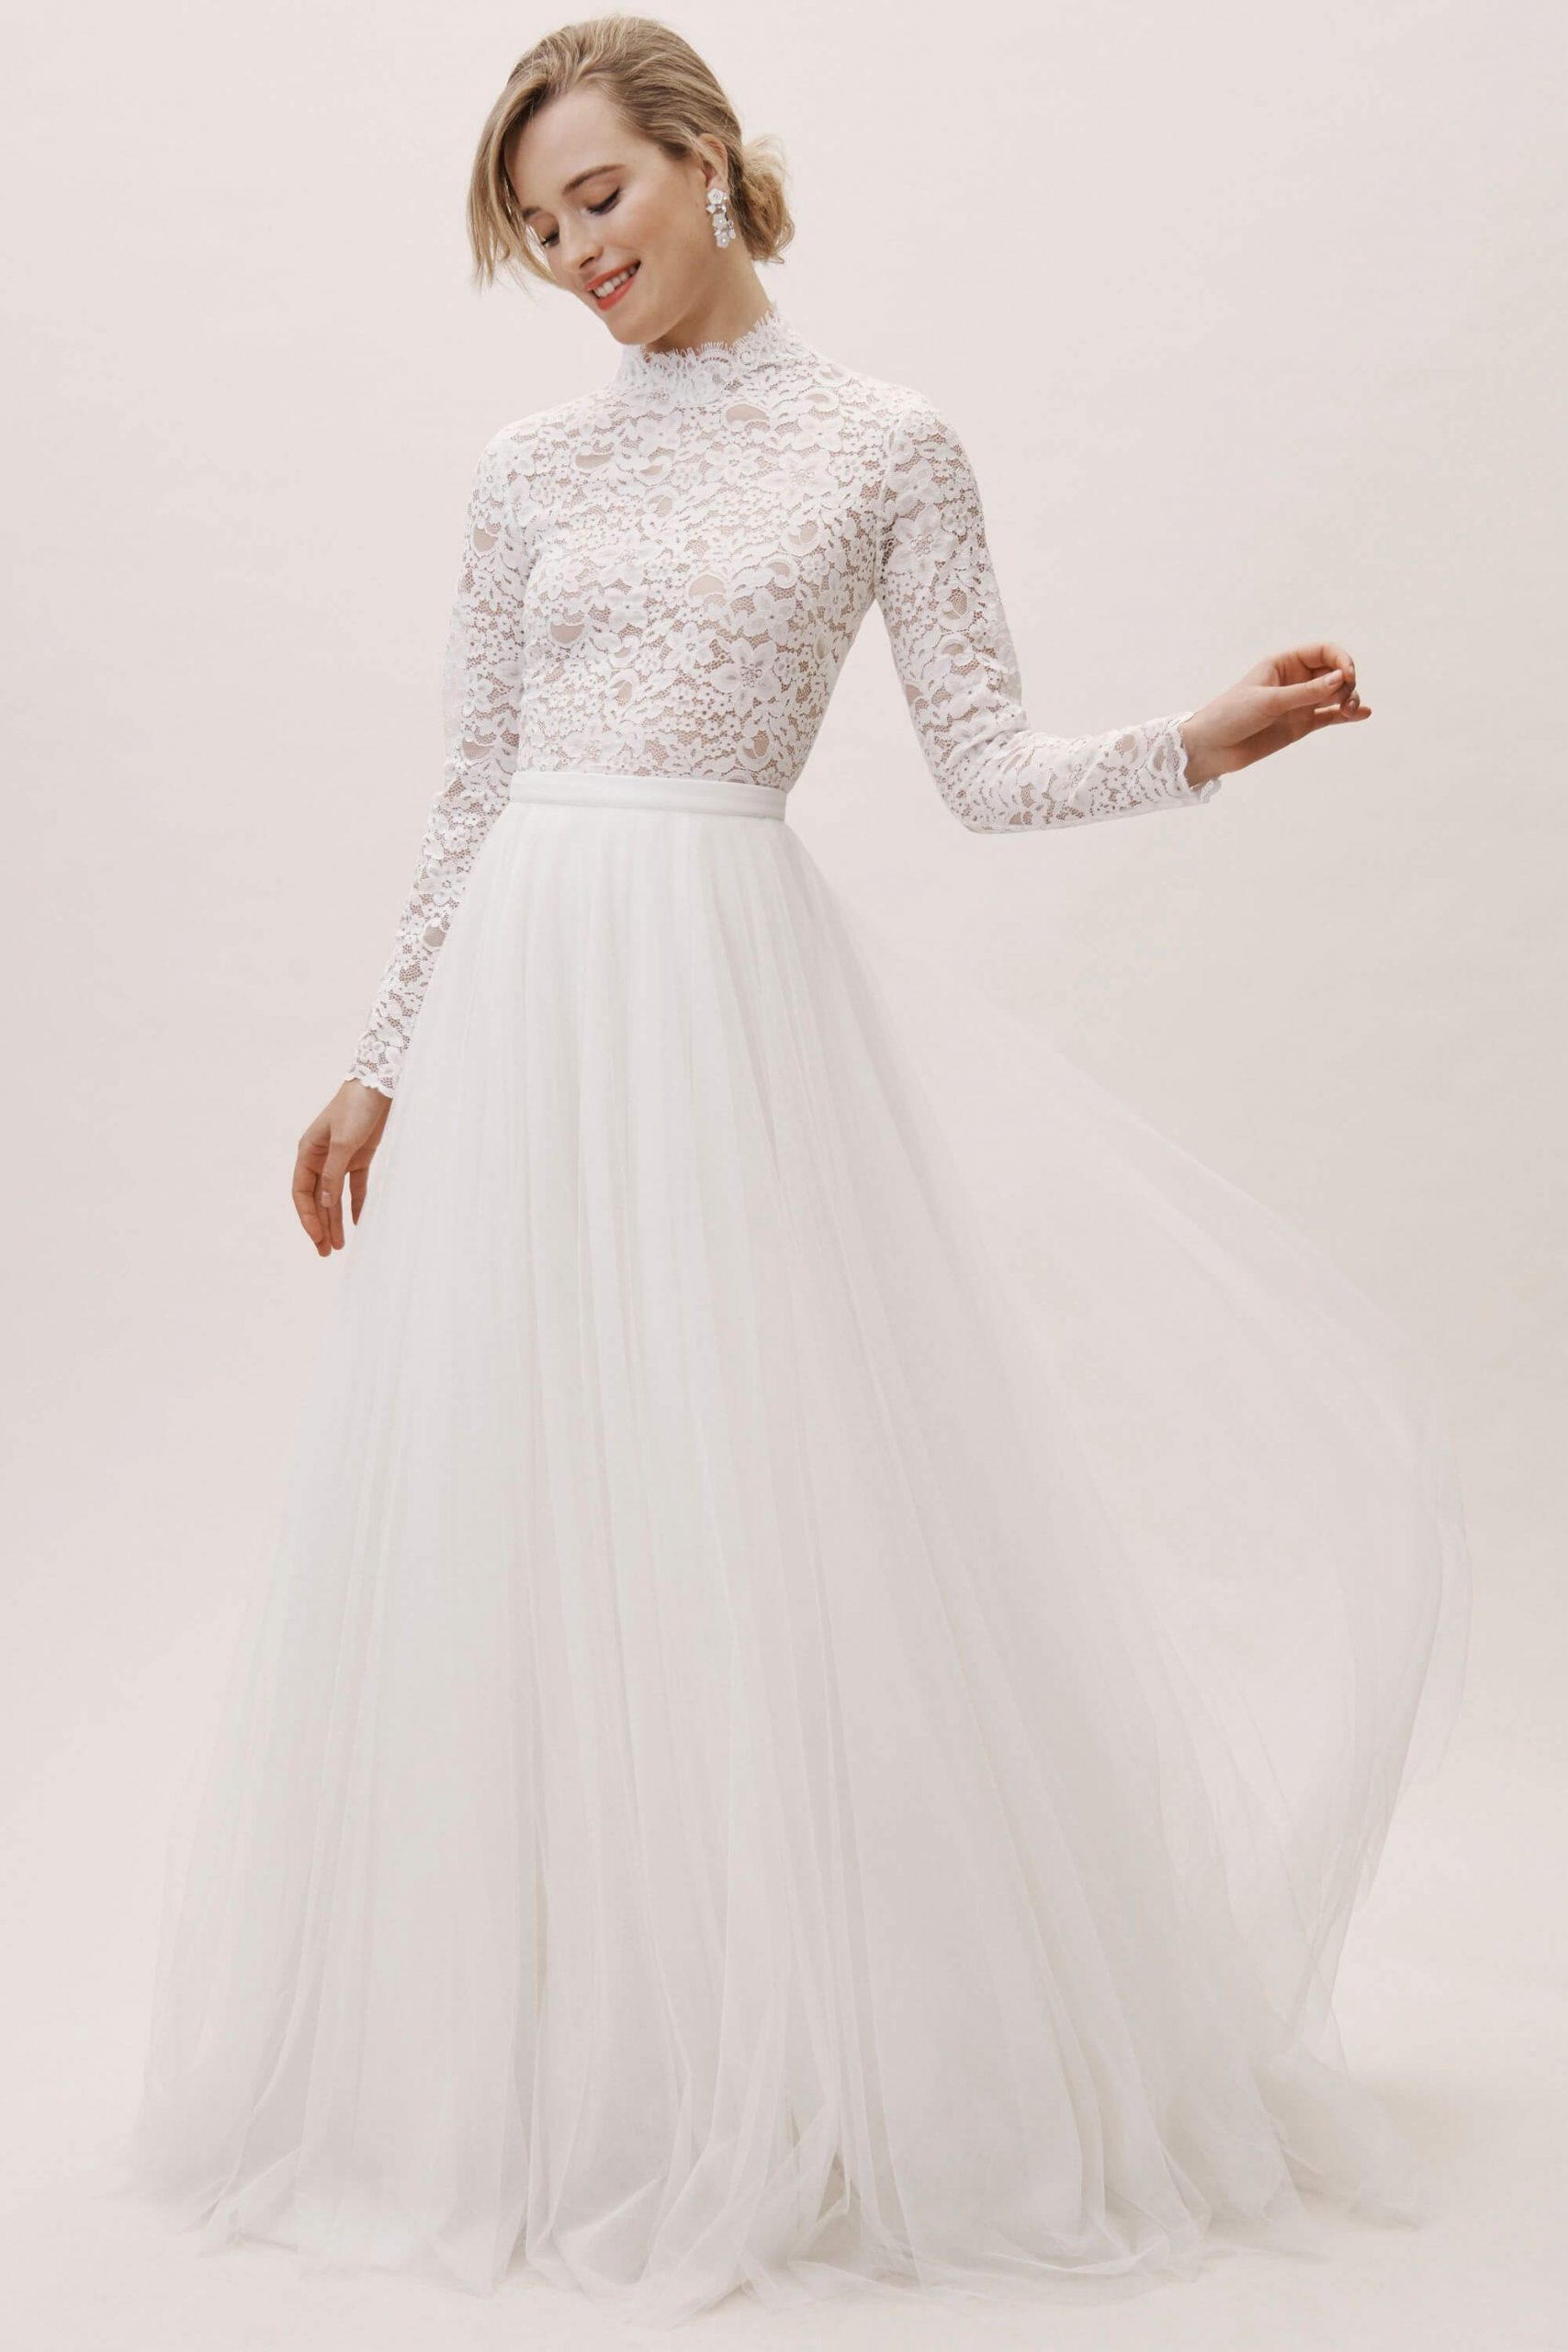 15 Wedding Dresses Under 1000 Dollars - Perfete